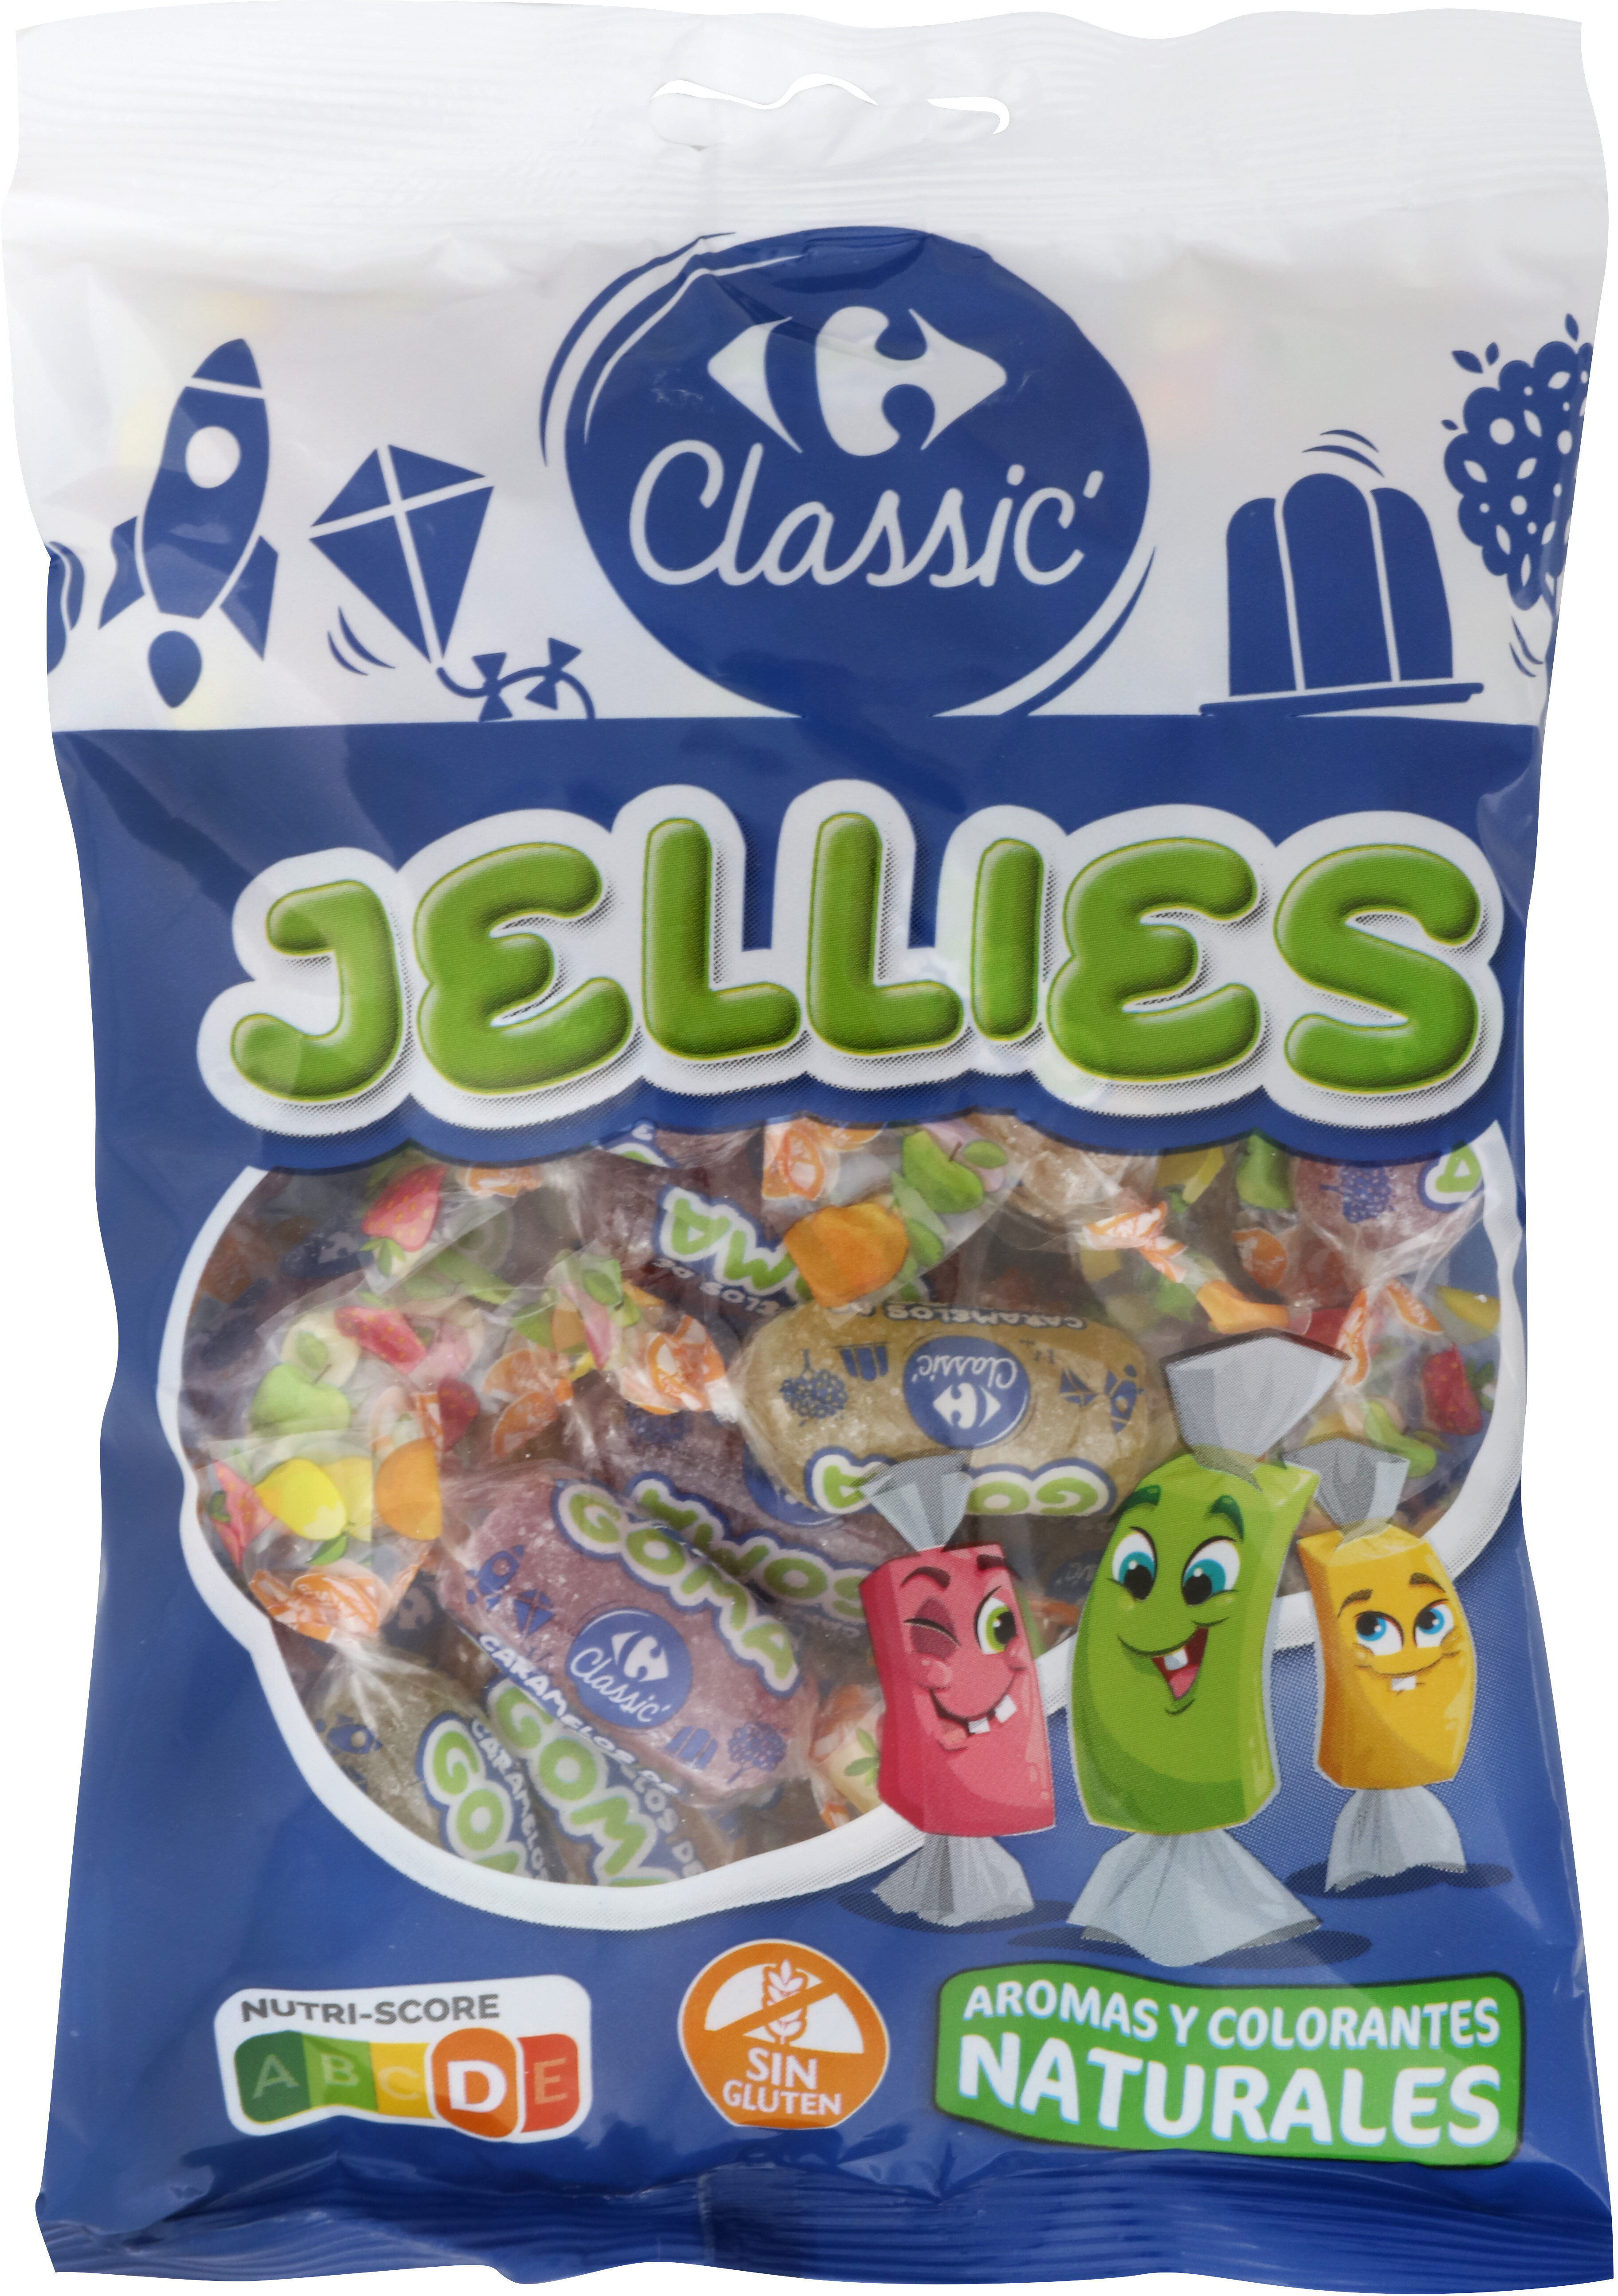 Caramelos de goma Jellies - Producto